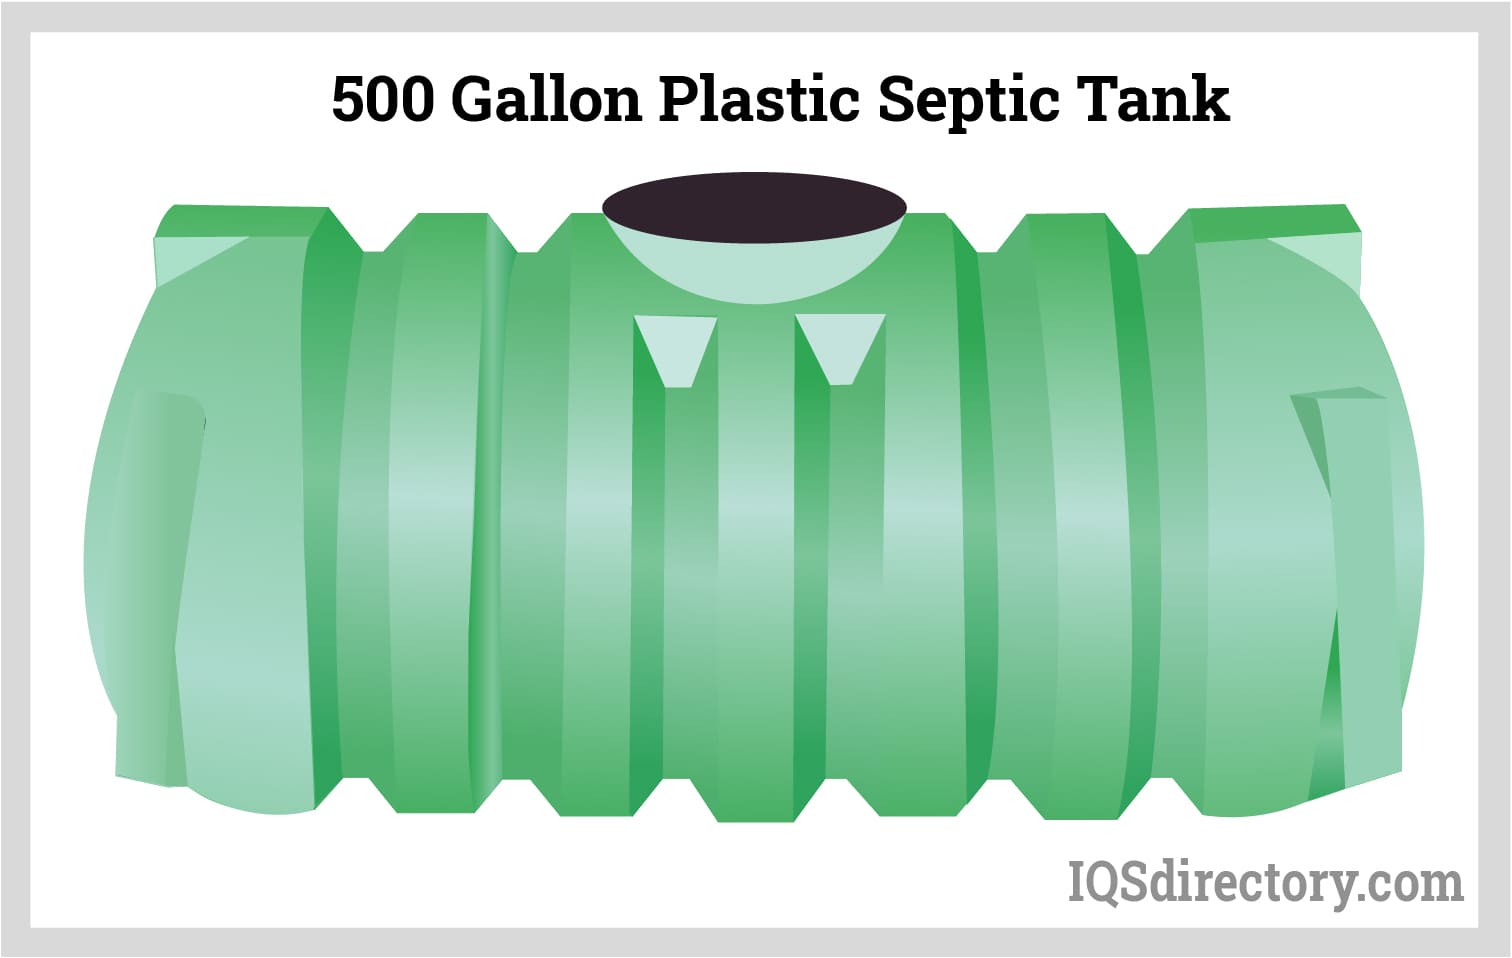 500 Gallon Plastic Septic Tank